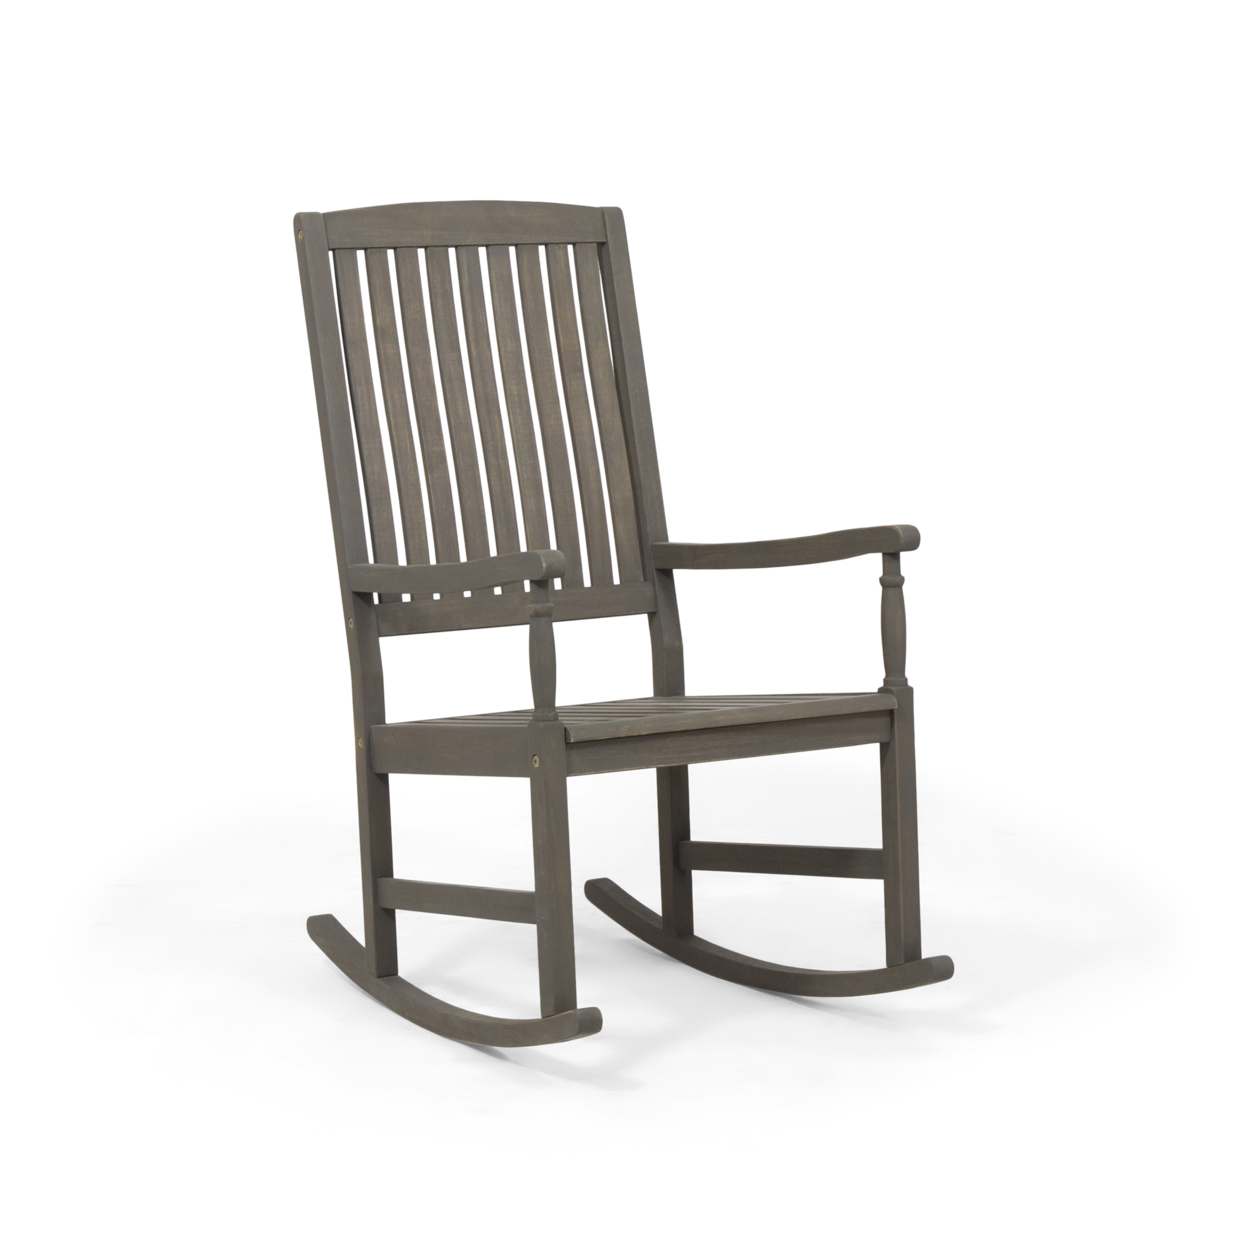 Myrna Outdoor Acacia Wood Rocking Chair - Dark Gray Finish